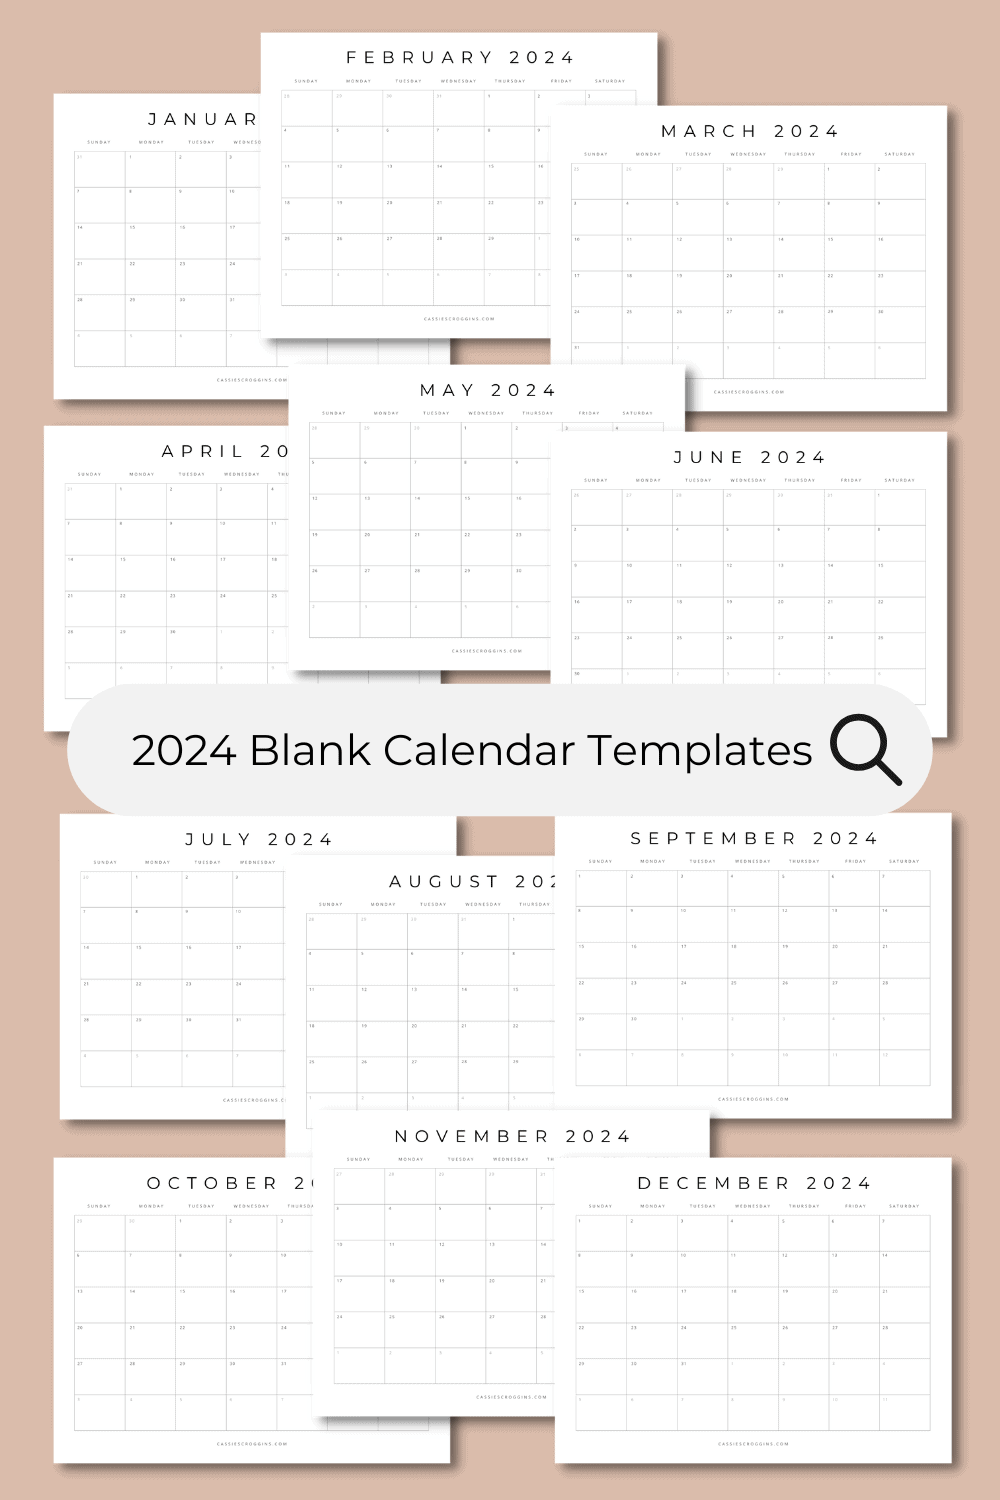 Free Printable 2024 Blank Calendar Templates (All 12 Months) in Free Printable Calendar 2024 Templates